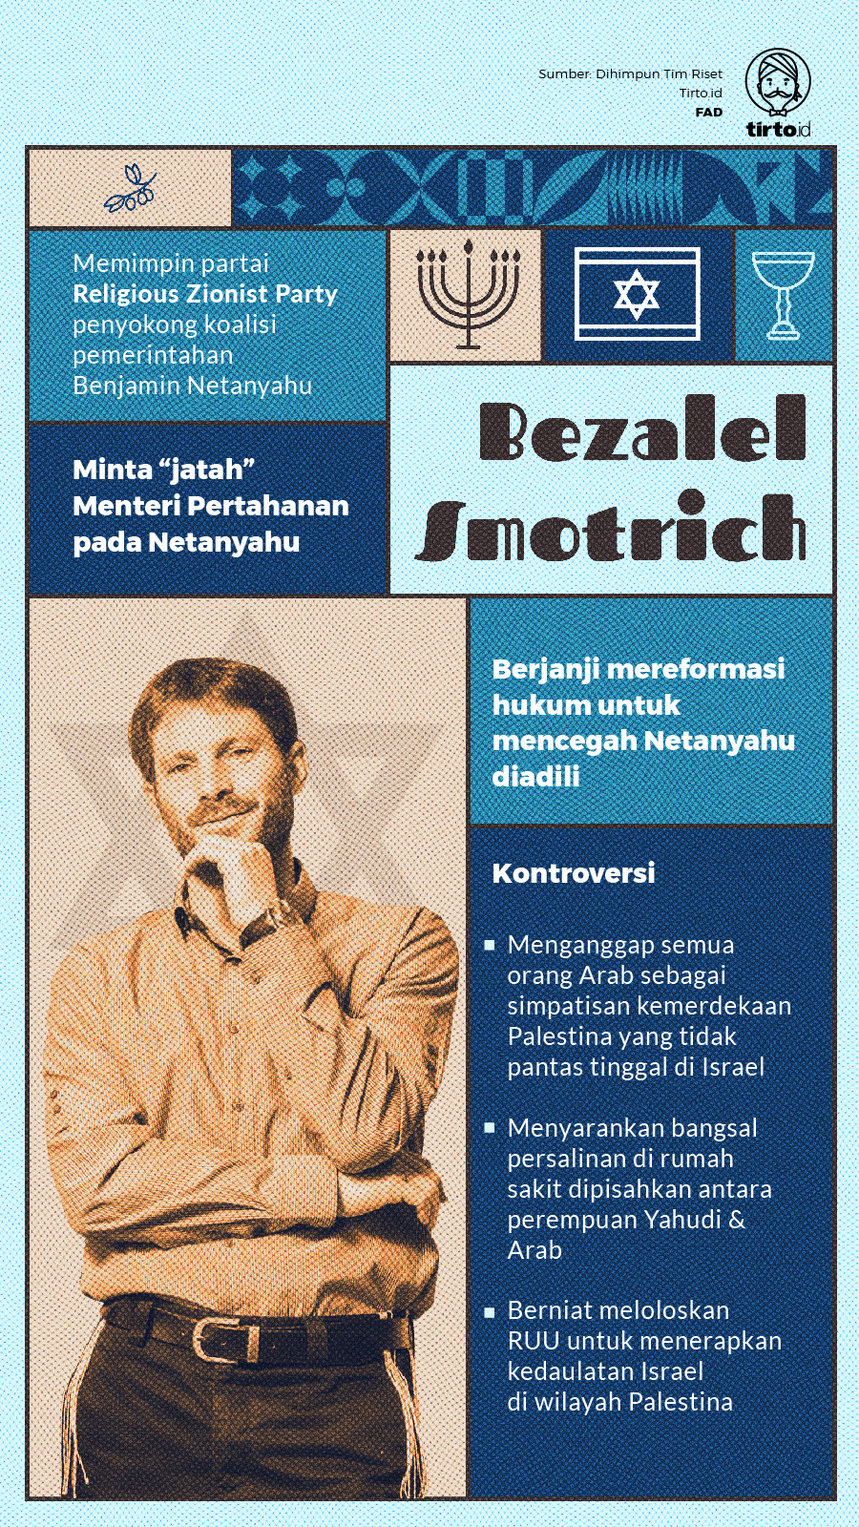 Infografik Bezalel Smotrich